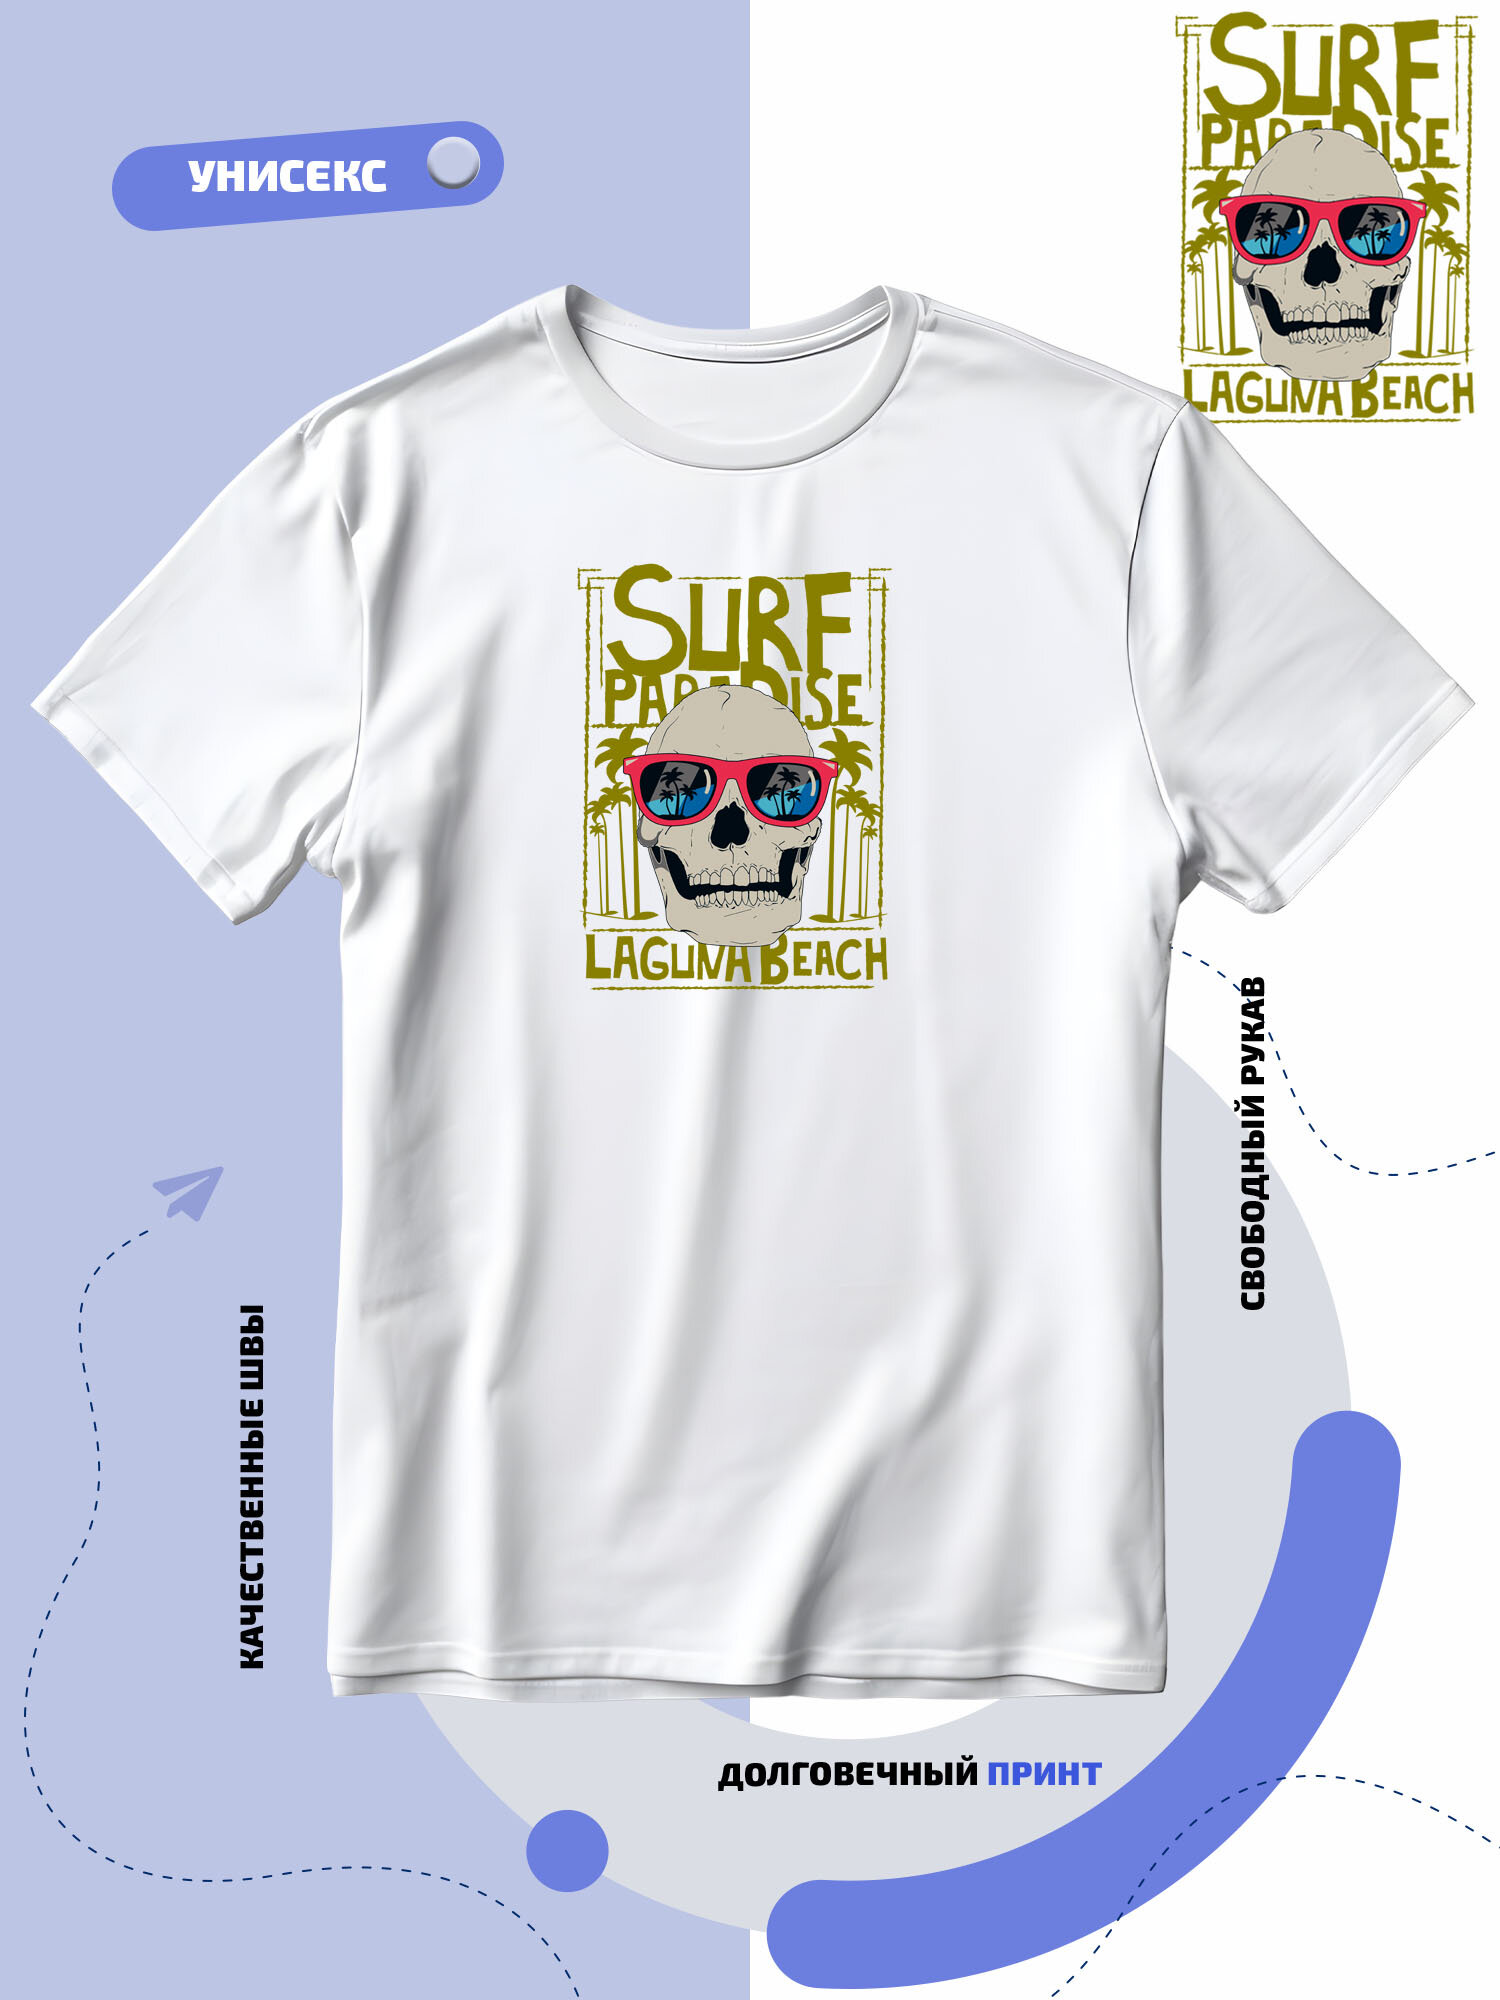 Футболка SMAIL-P череп в очках Laguna beach surf paradise